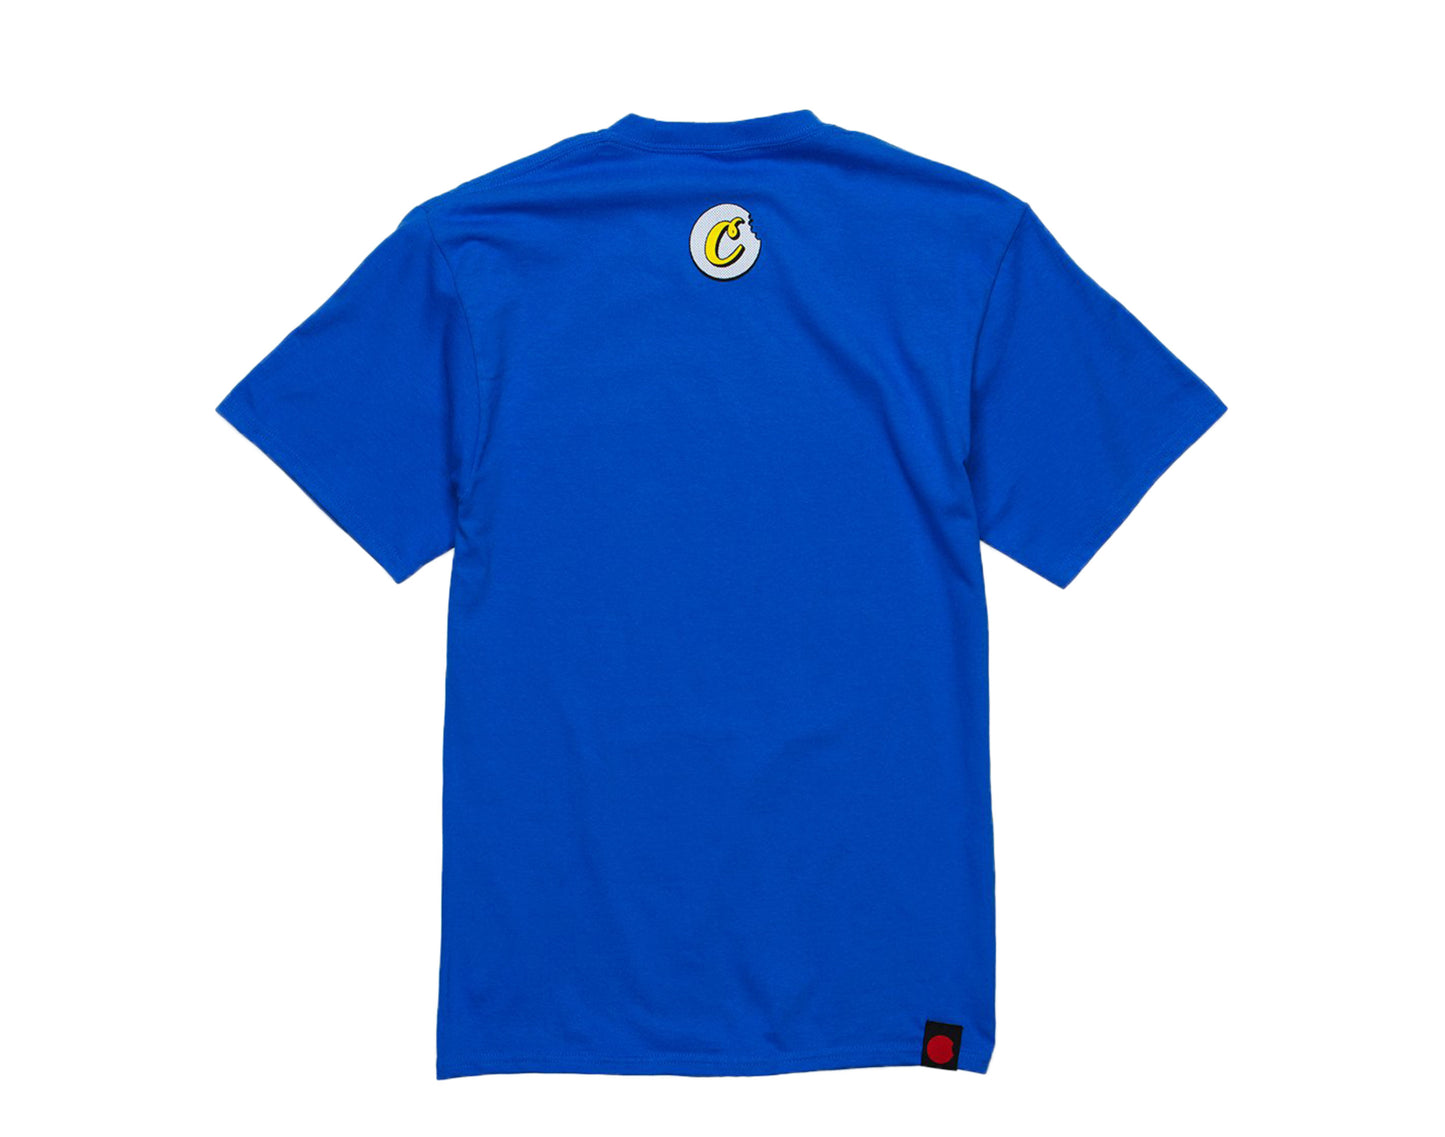 Cookies Star-Crossed Royal Blue Men's Tee Shirt 1546T4366-RBL